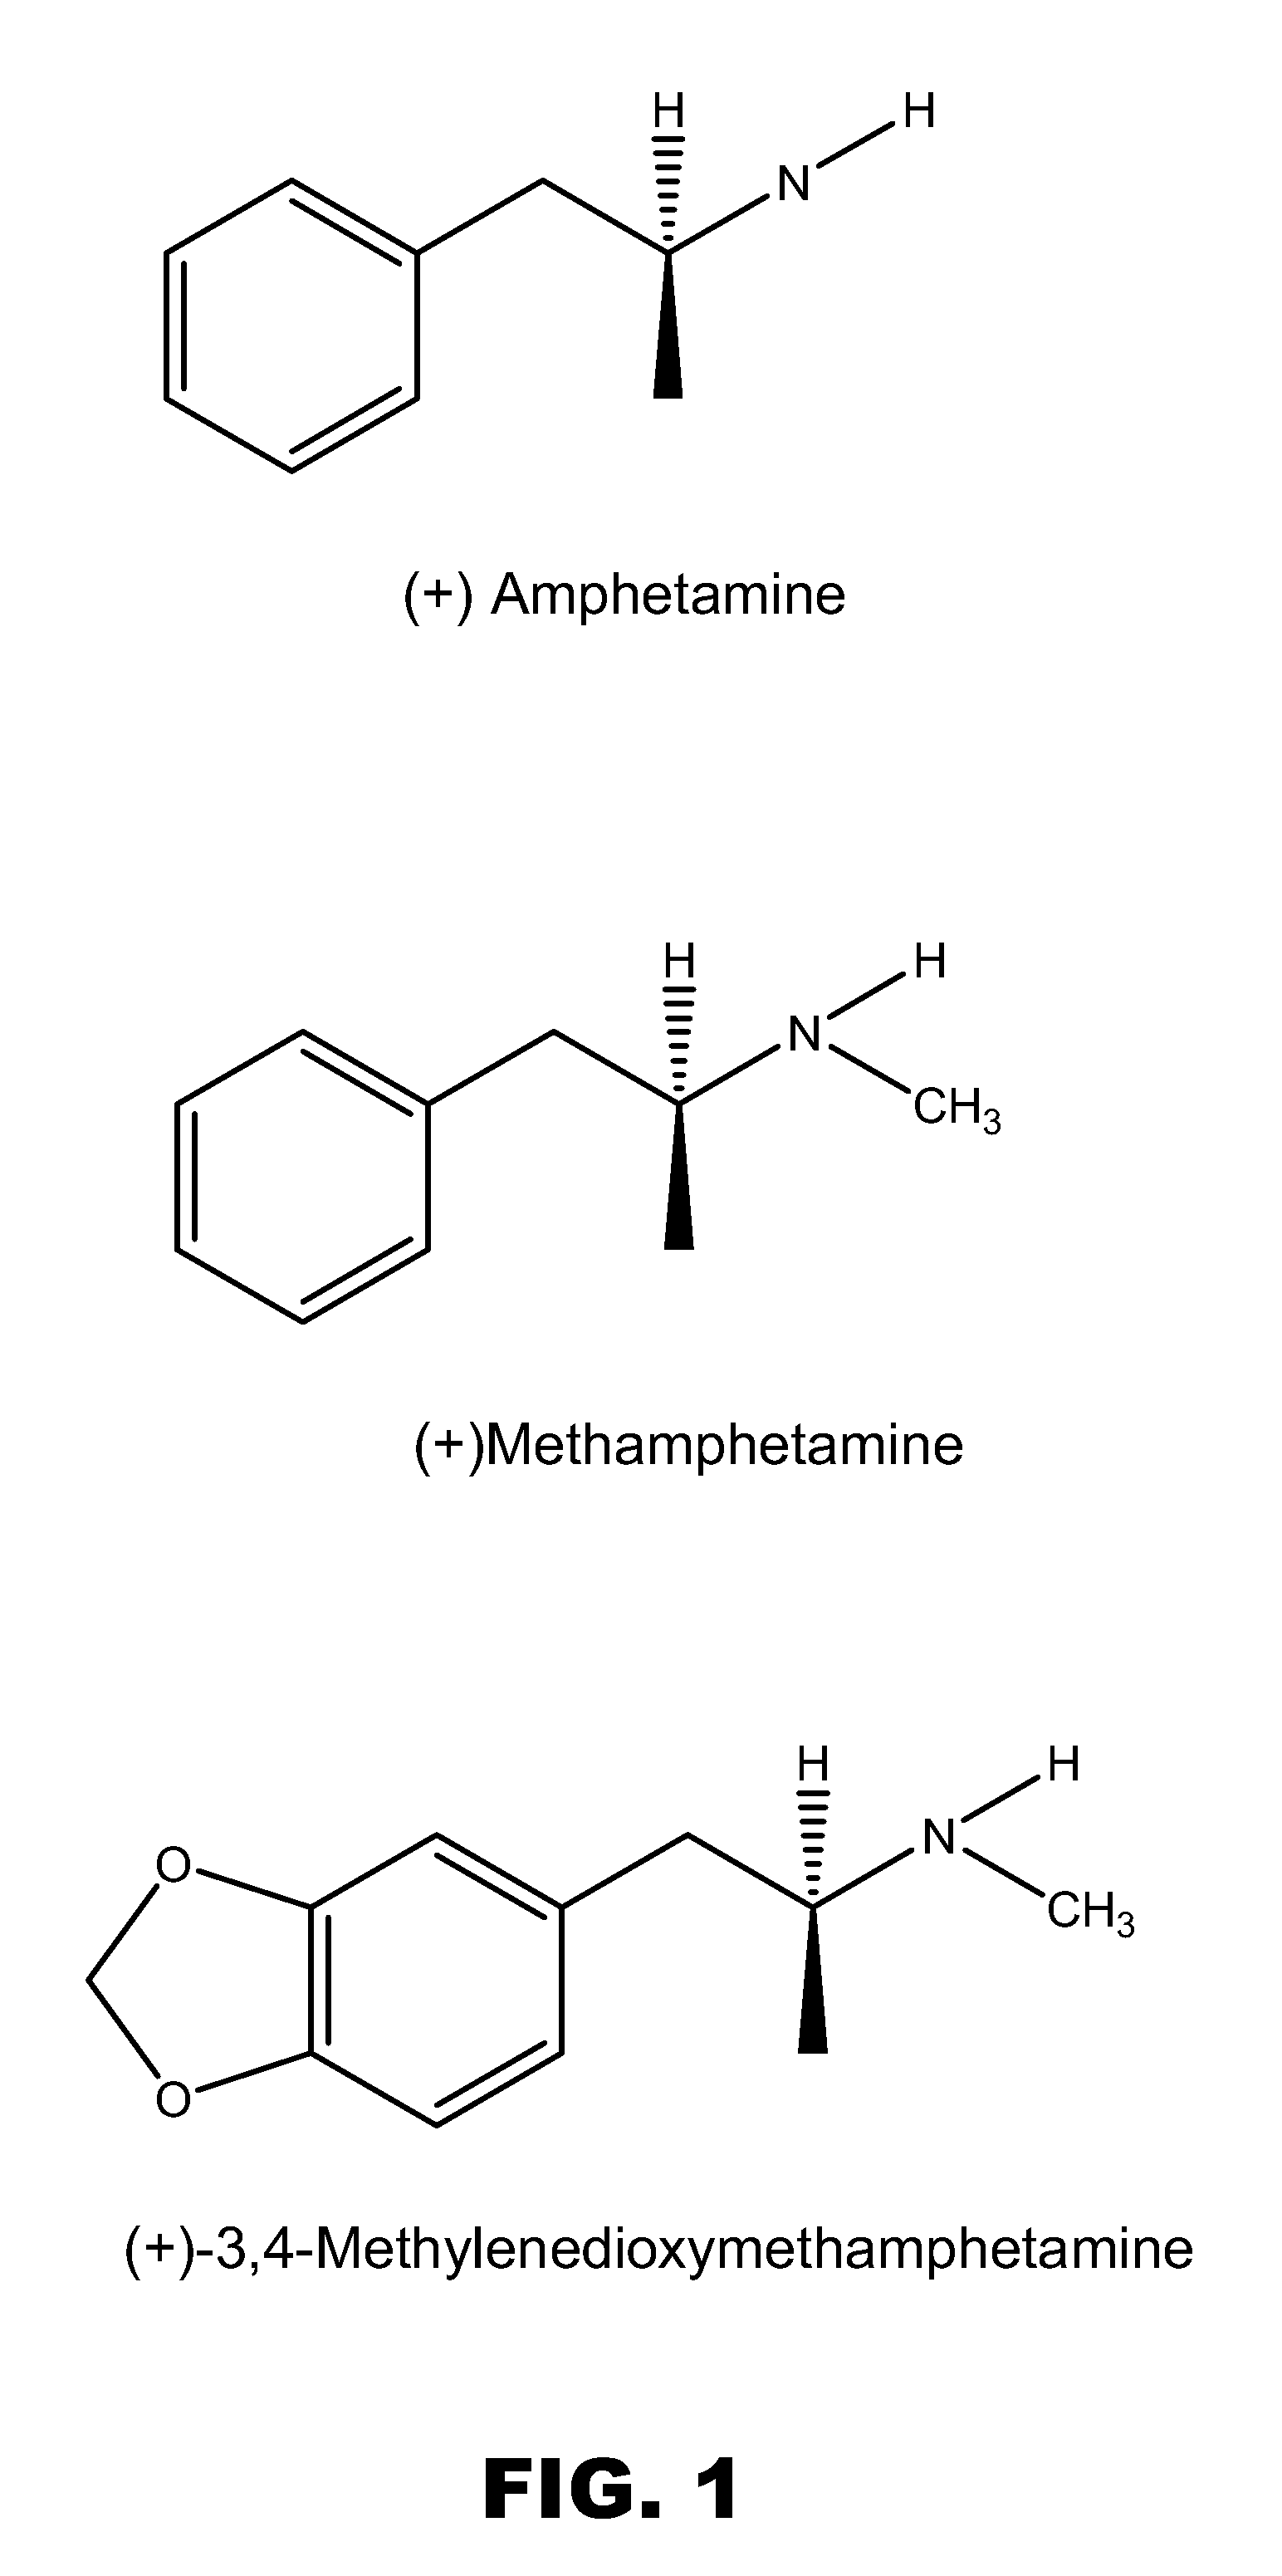 Monoclonal antibodies that selectively recognize methamphetamine and methamphetamine like compounds